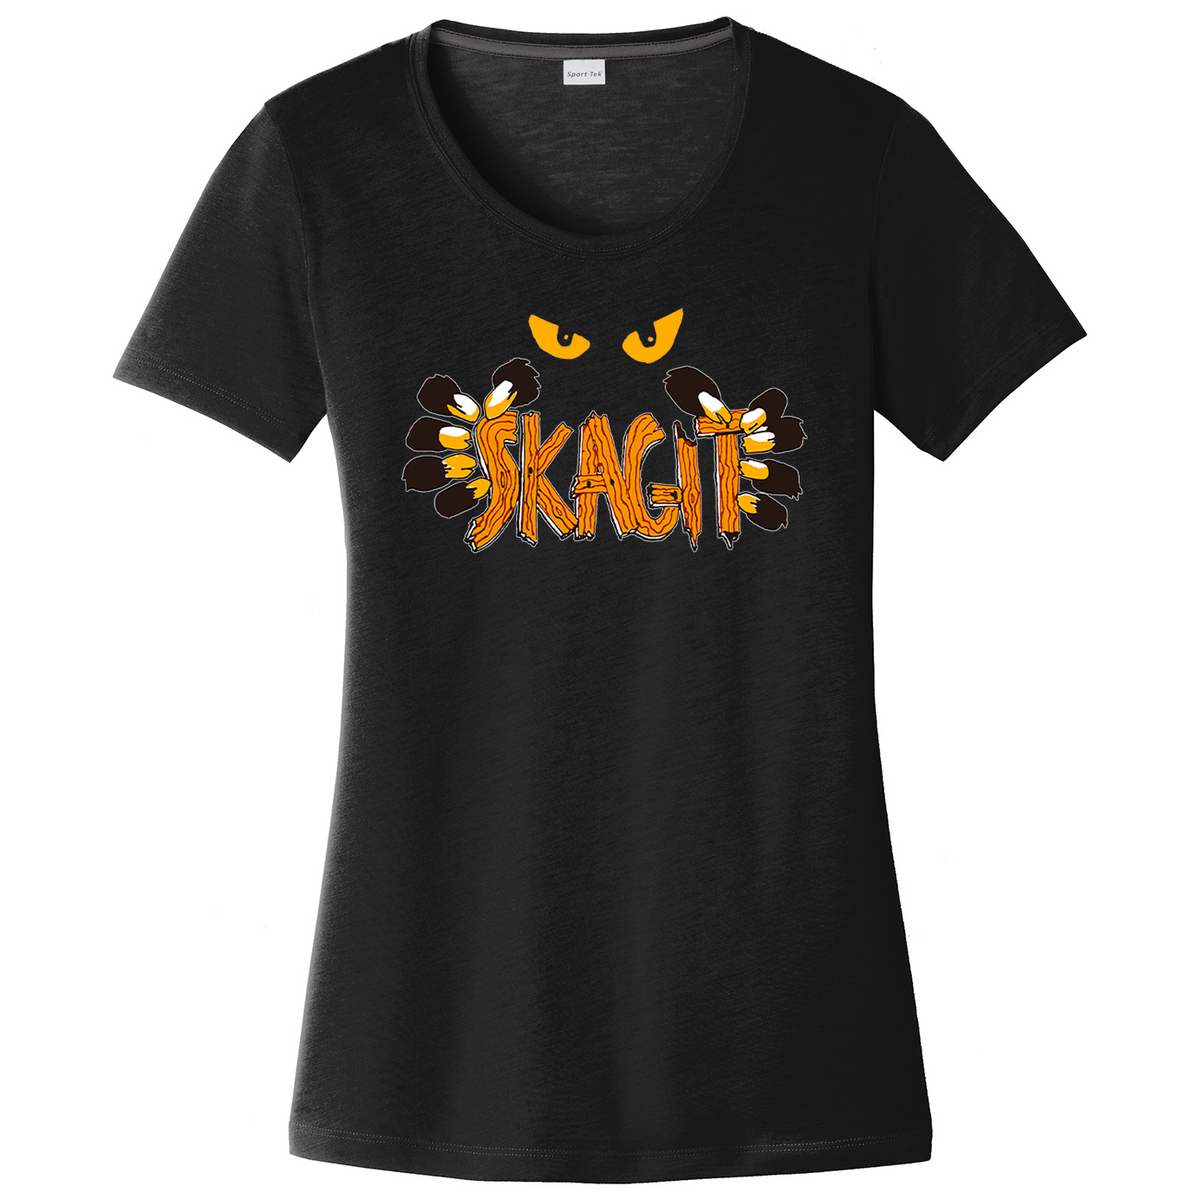 Skagit Volleyball Women's CottonTouch Performance T-Shirt